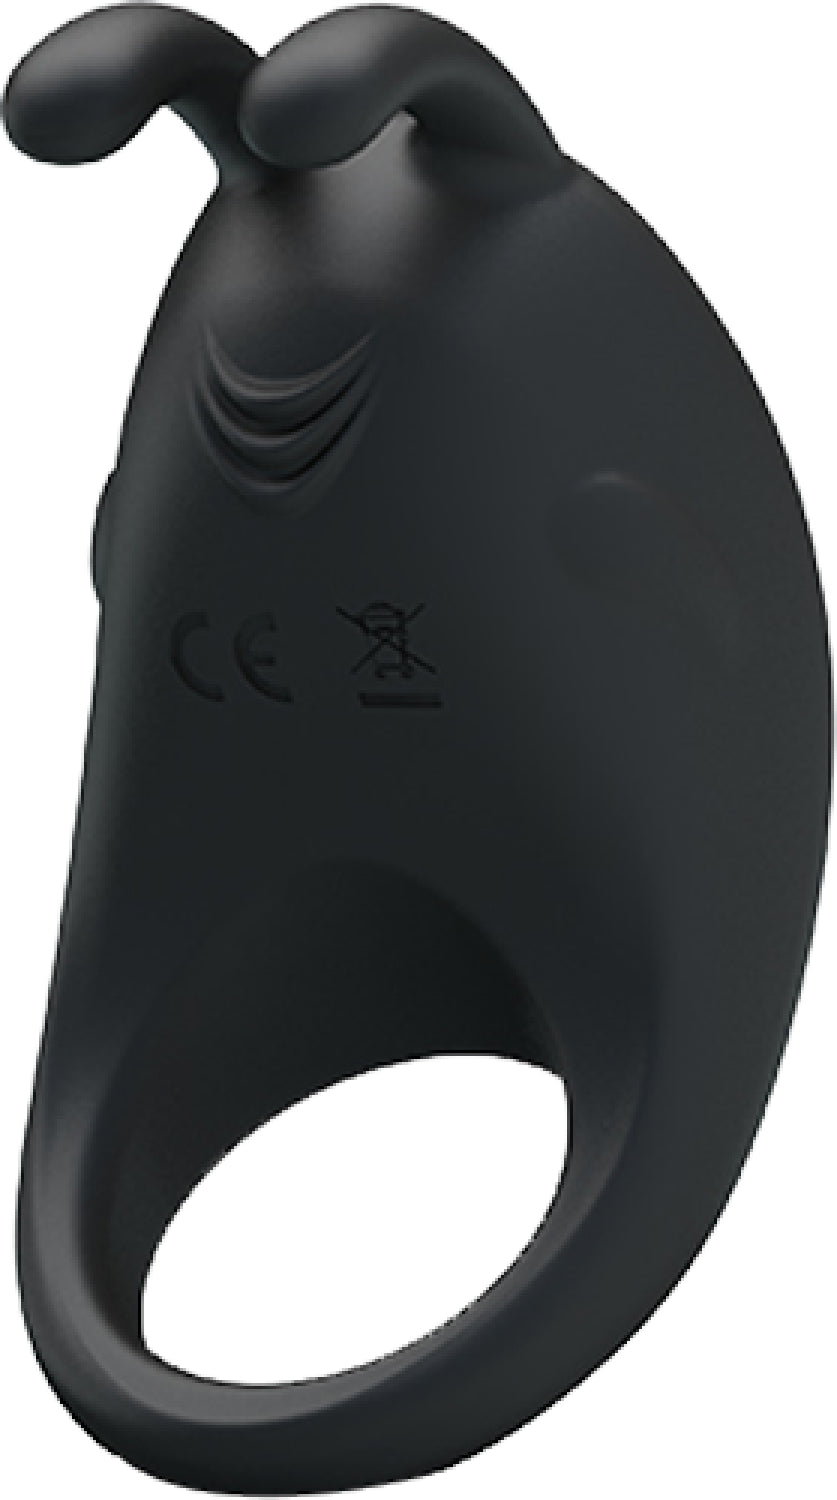 Rechargeable Rabbit Vibrator Cockring (Black)